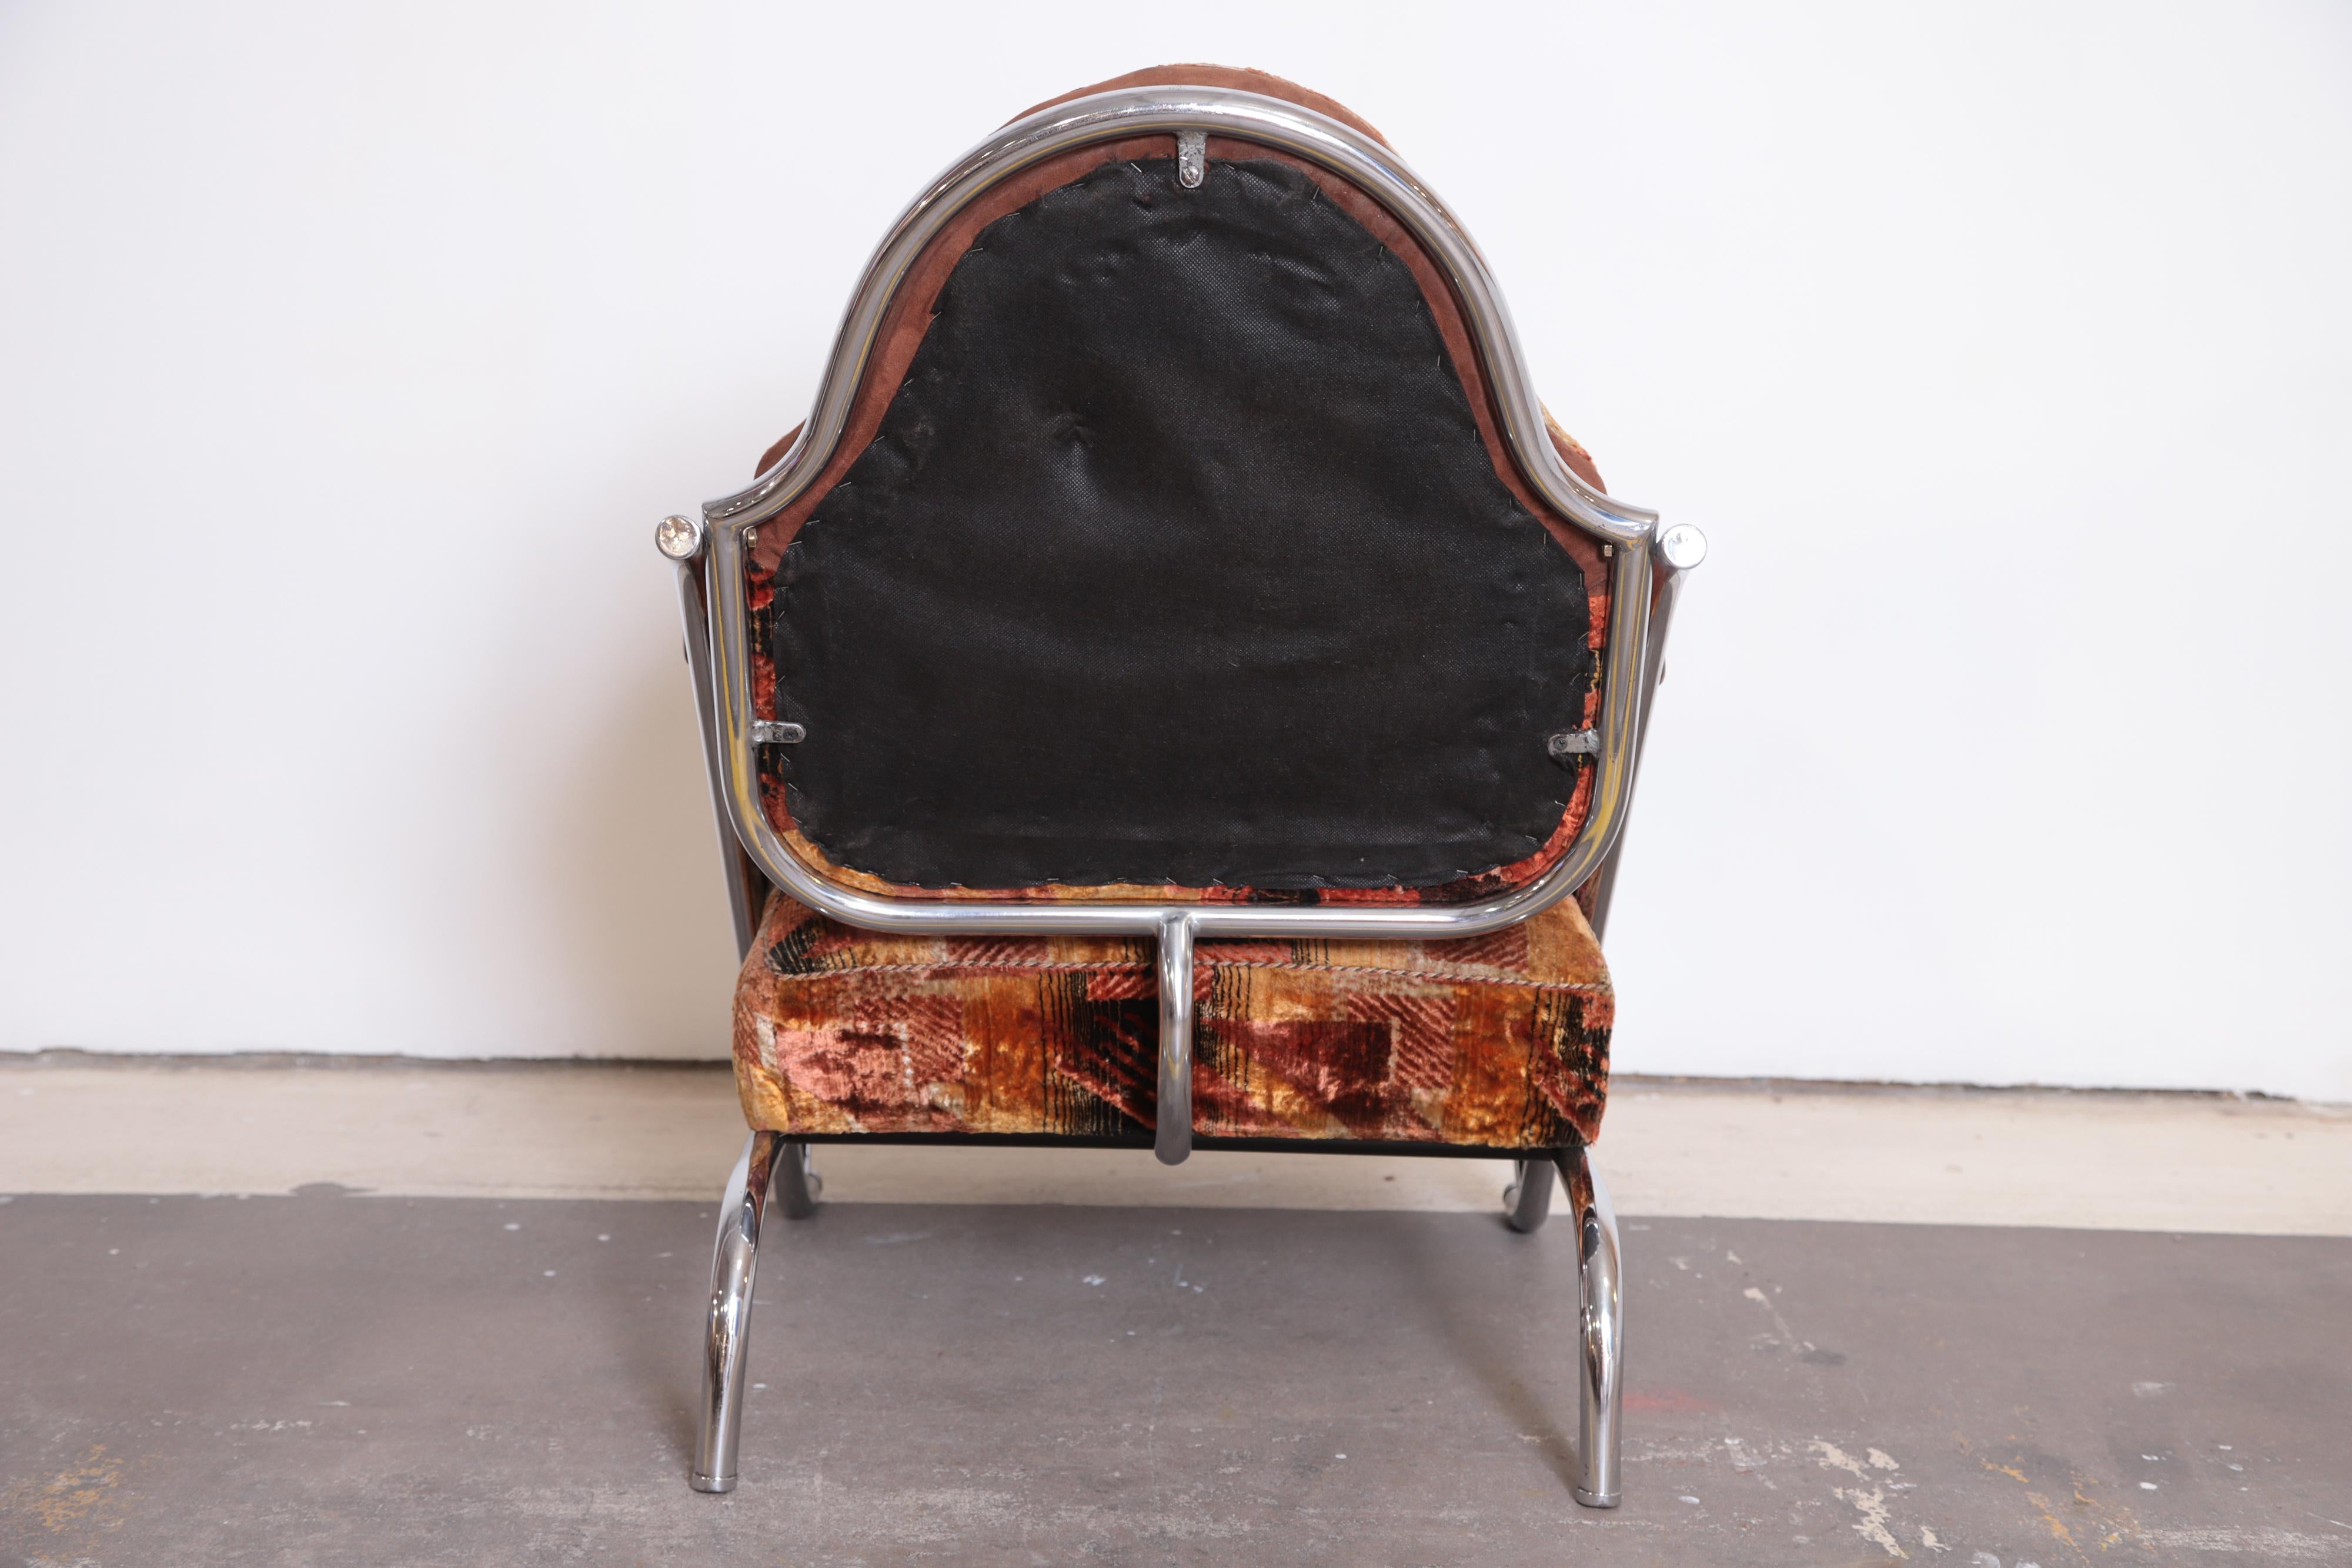 Art Deco Machine Age Armchair, Original Fabric Unusual Jazz Age Design For Sale 5